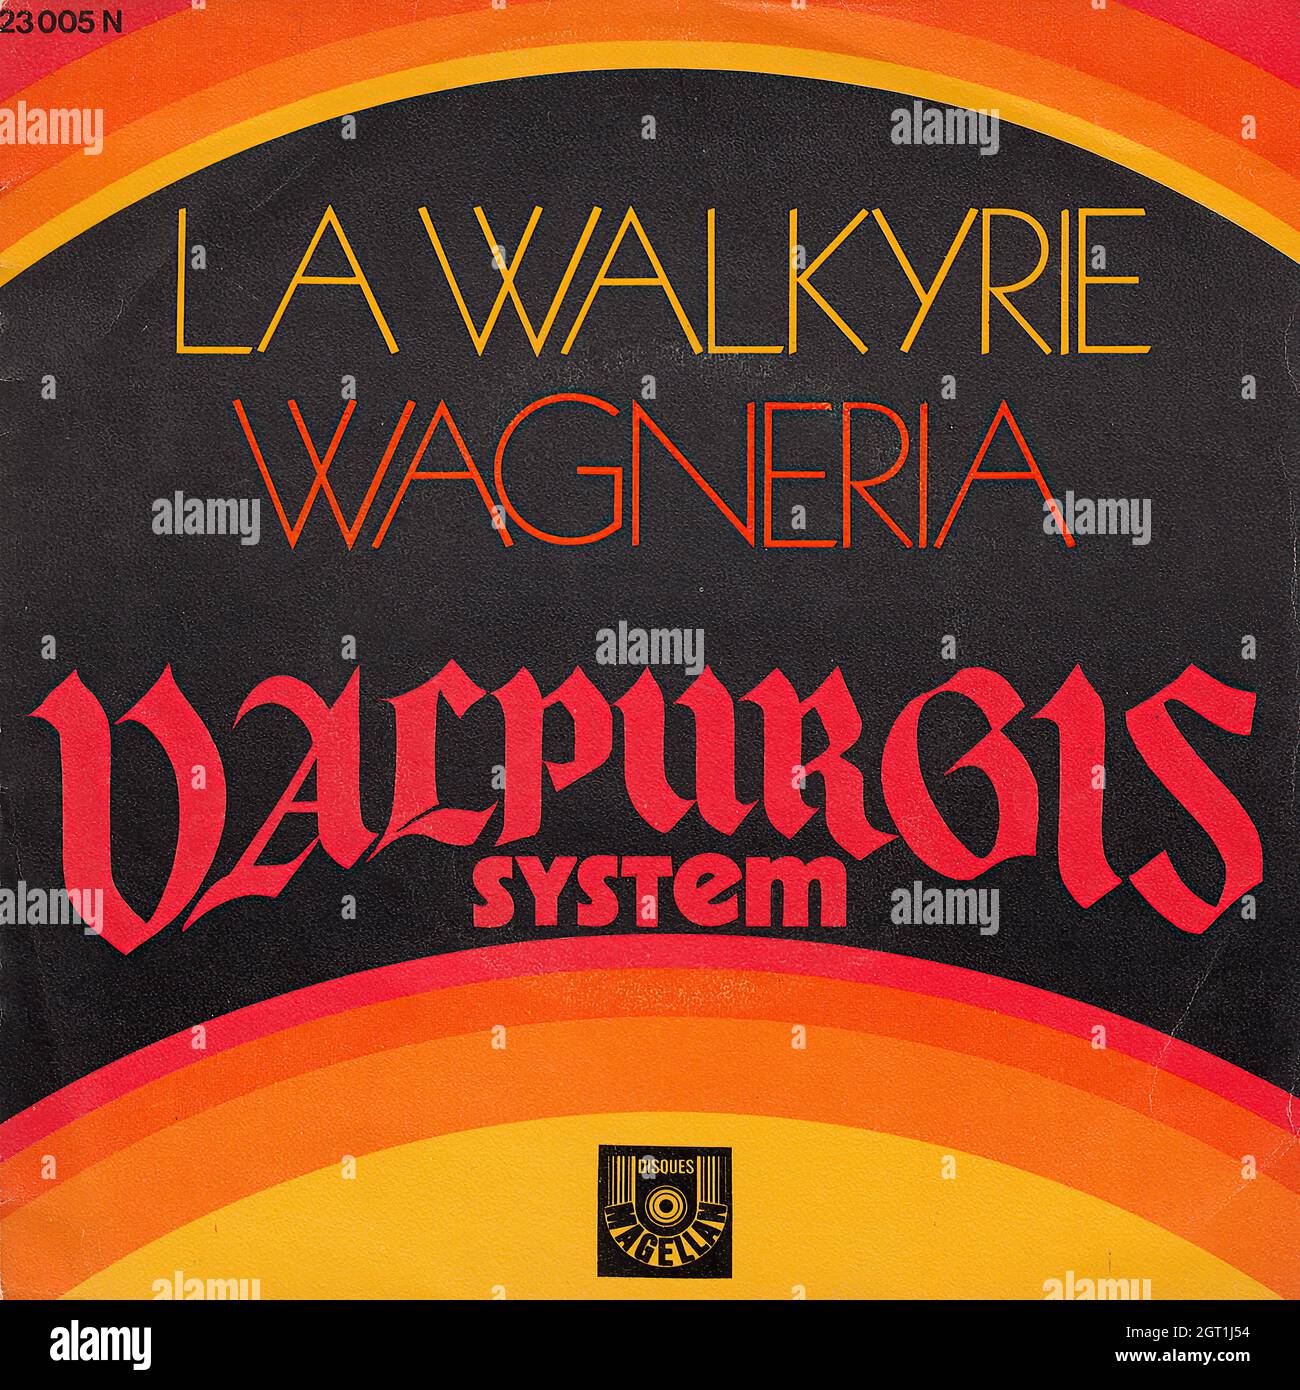 Valpurgis System - La Walkyrie - Wagneria 45rpm - Vintage Vinyl Record Cover Stock Photo